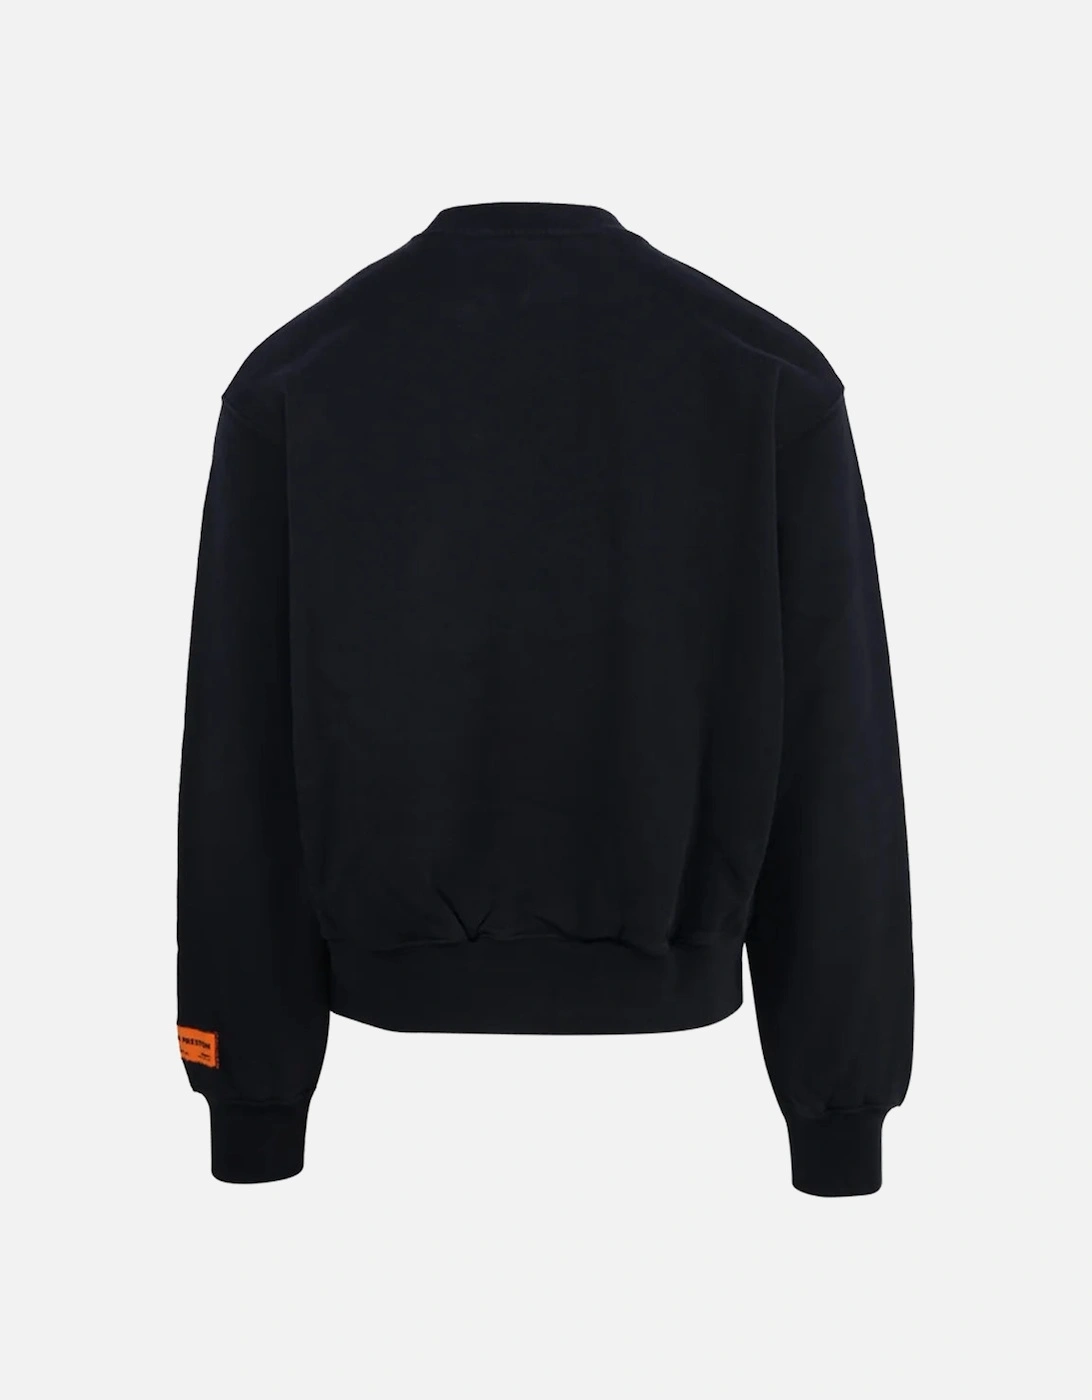 Censored Heron Crewneck Sweatshirt in Black